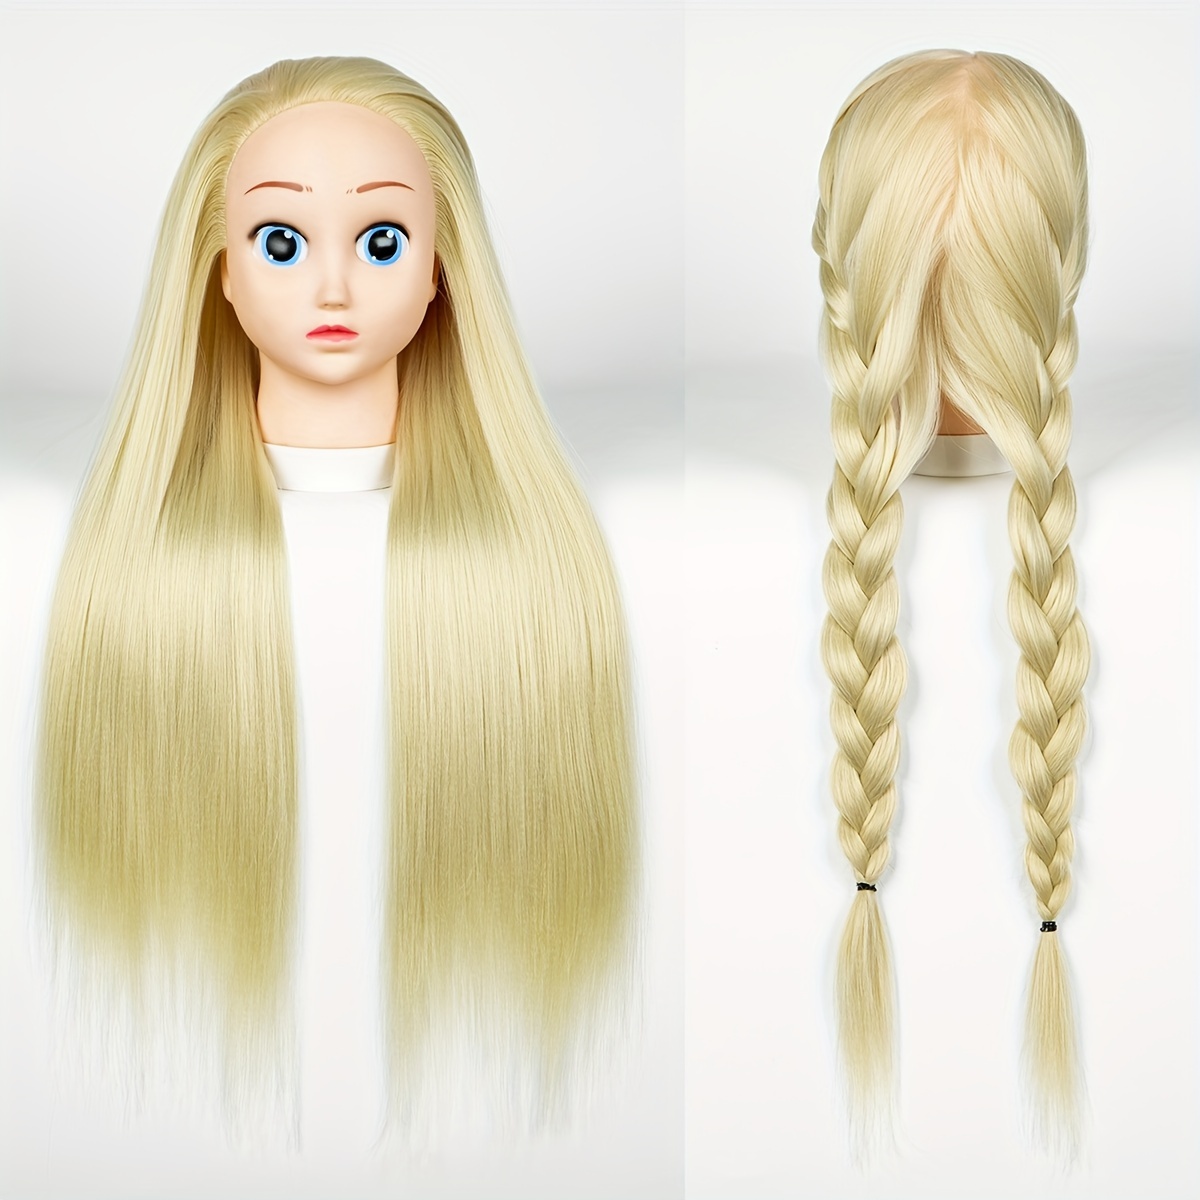 2 Count Braiding Training Hair Mannequin Head Doll Braided Model